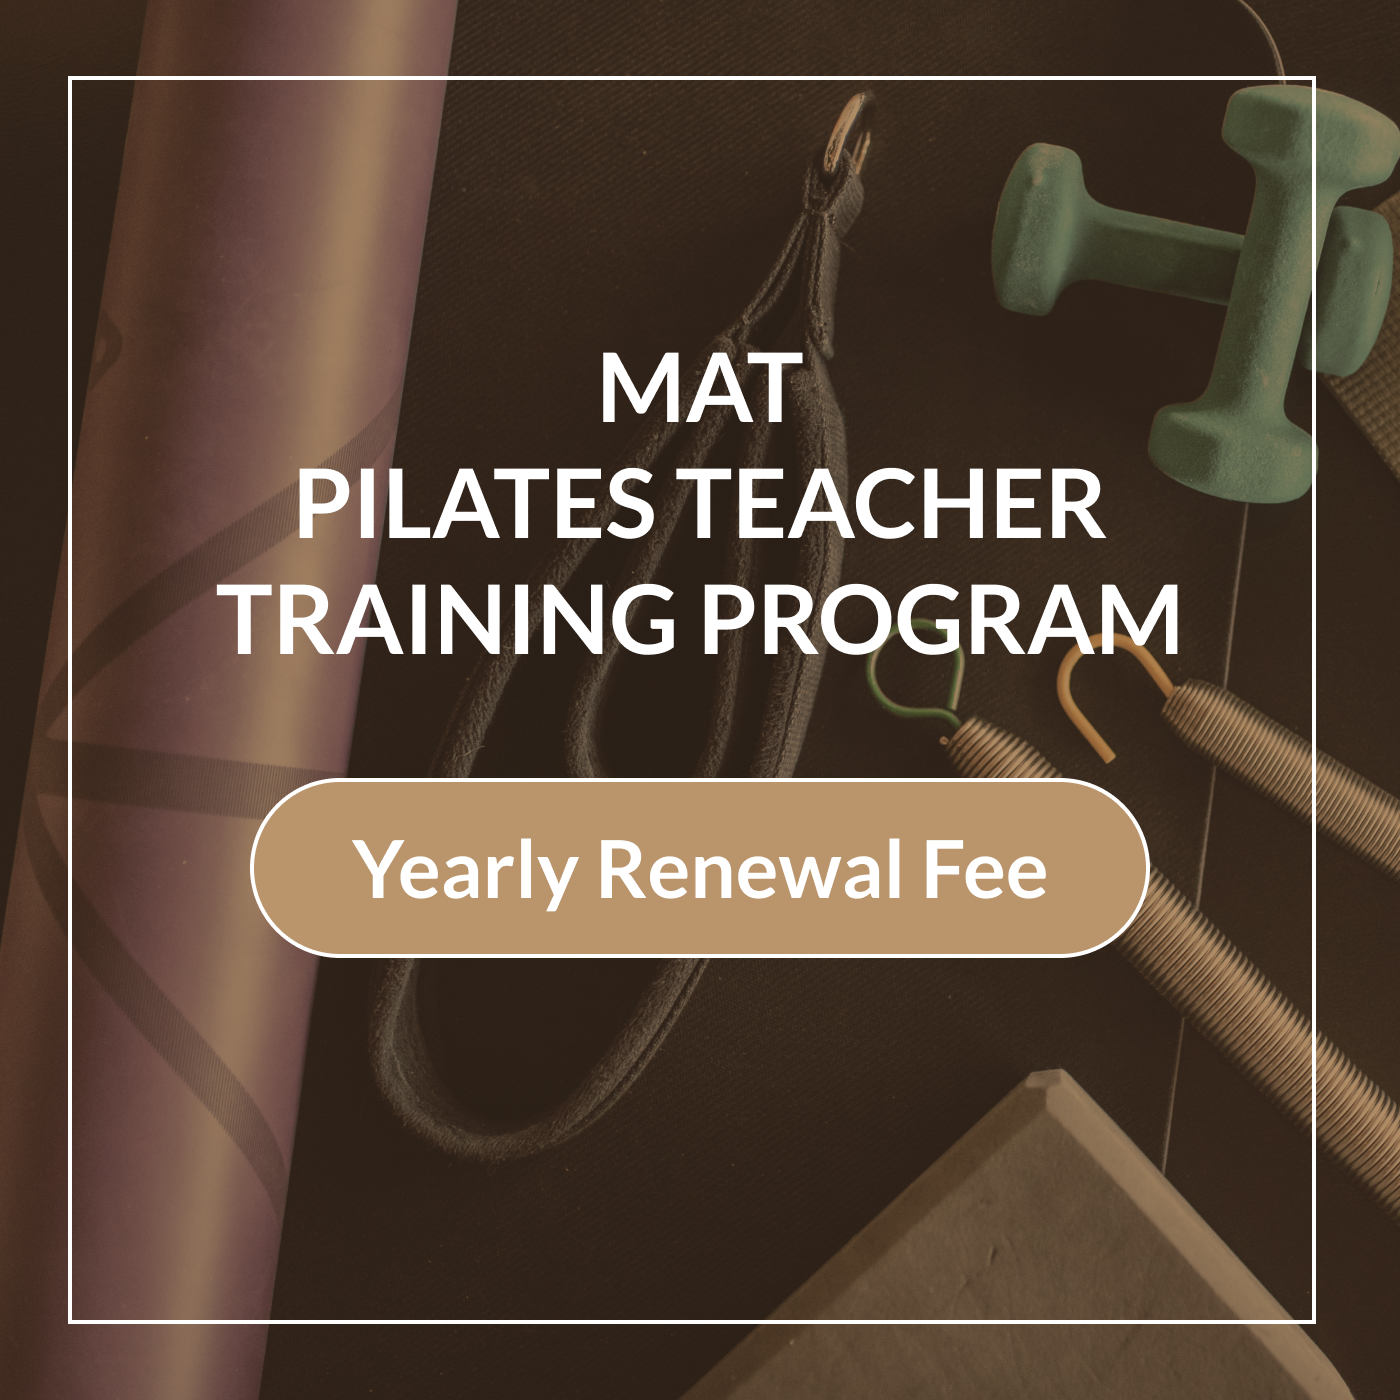 FINAL CHANCE: Get 30% Off on Reformer Pilates Mats and Yoga Mats